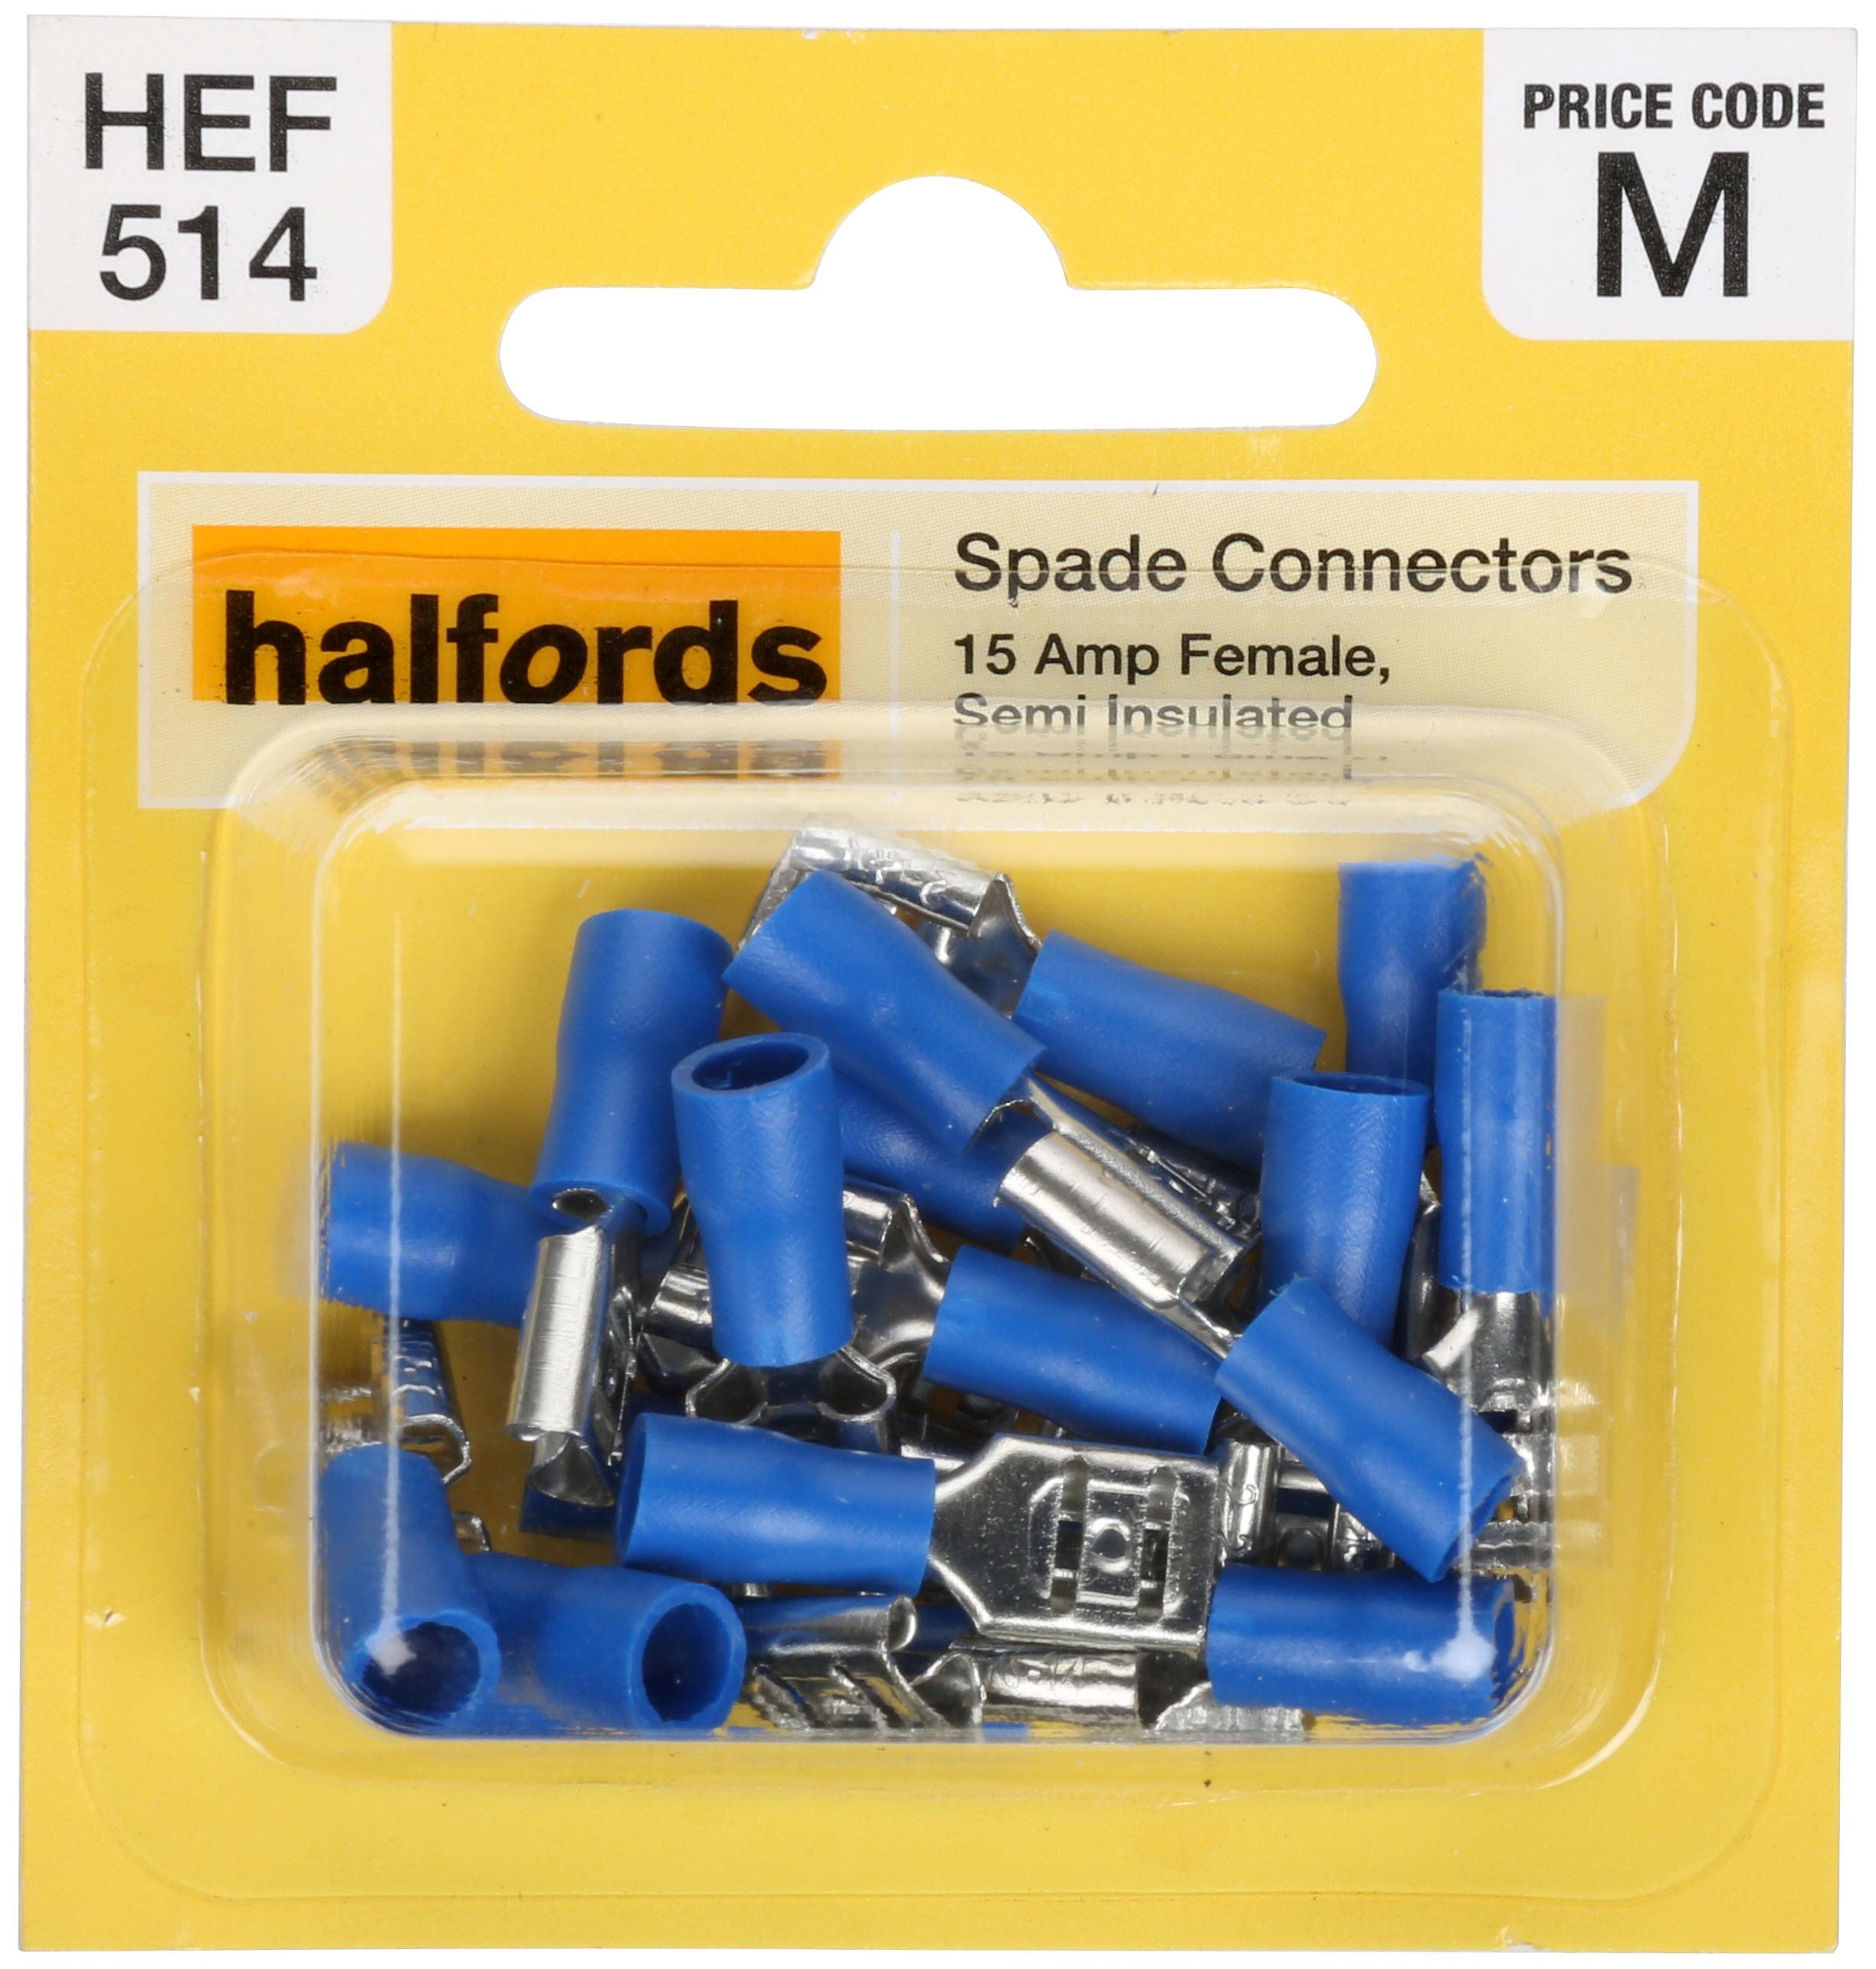 Halfords Spade Connectors (Hef514) 15 Amp/Female